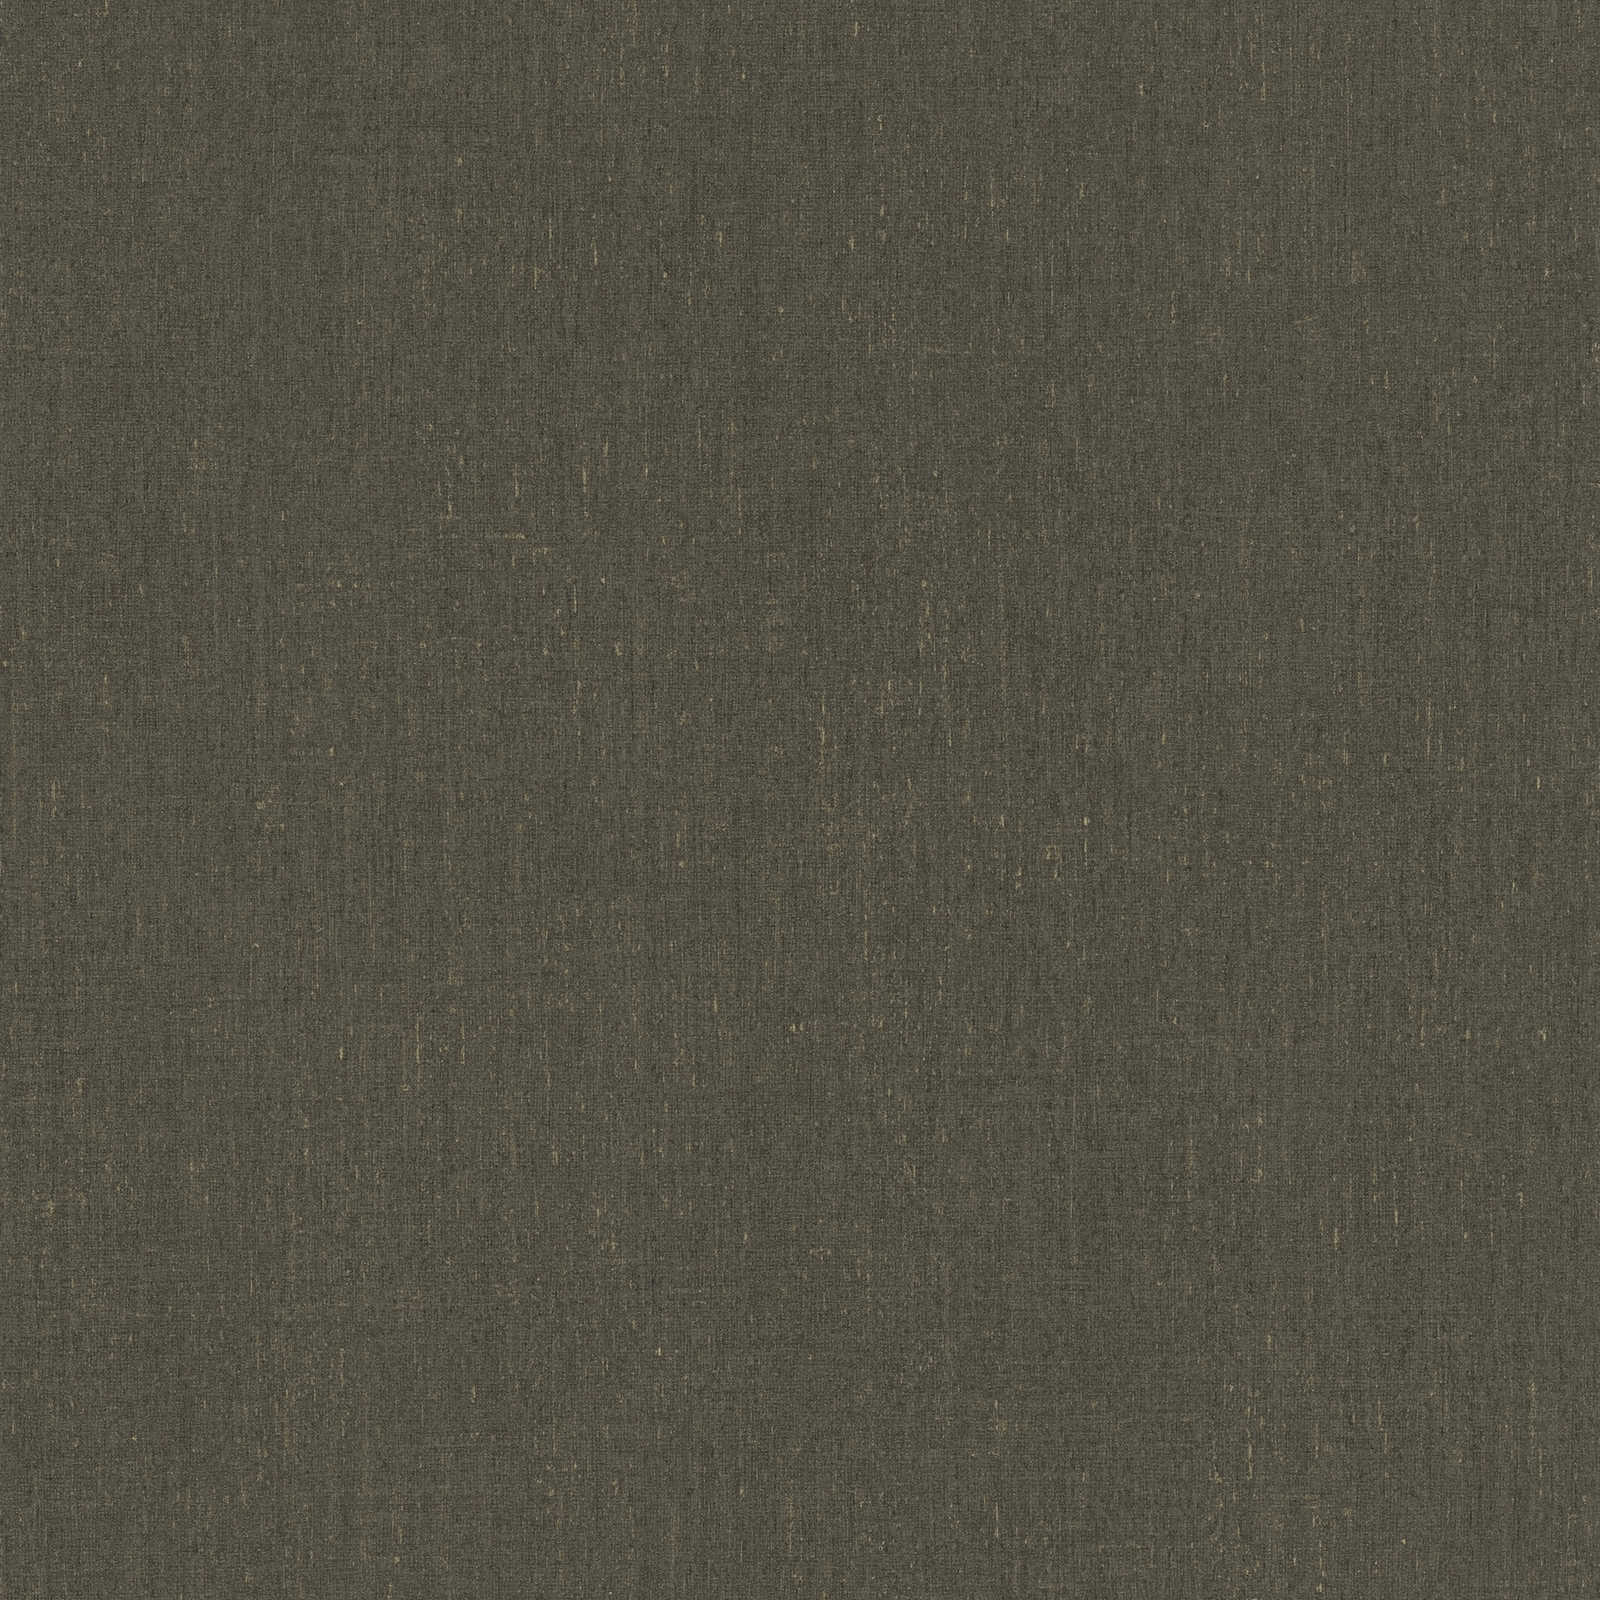 Dunkelbraune Tapete unifarben mit Strukturdetail – Braun, Grau
